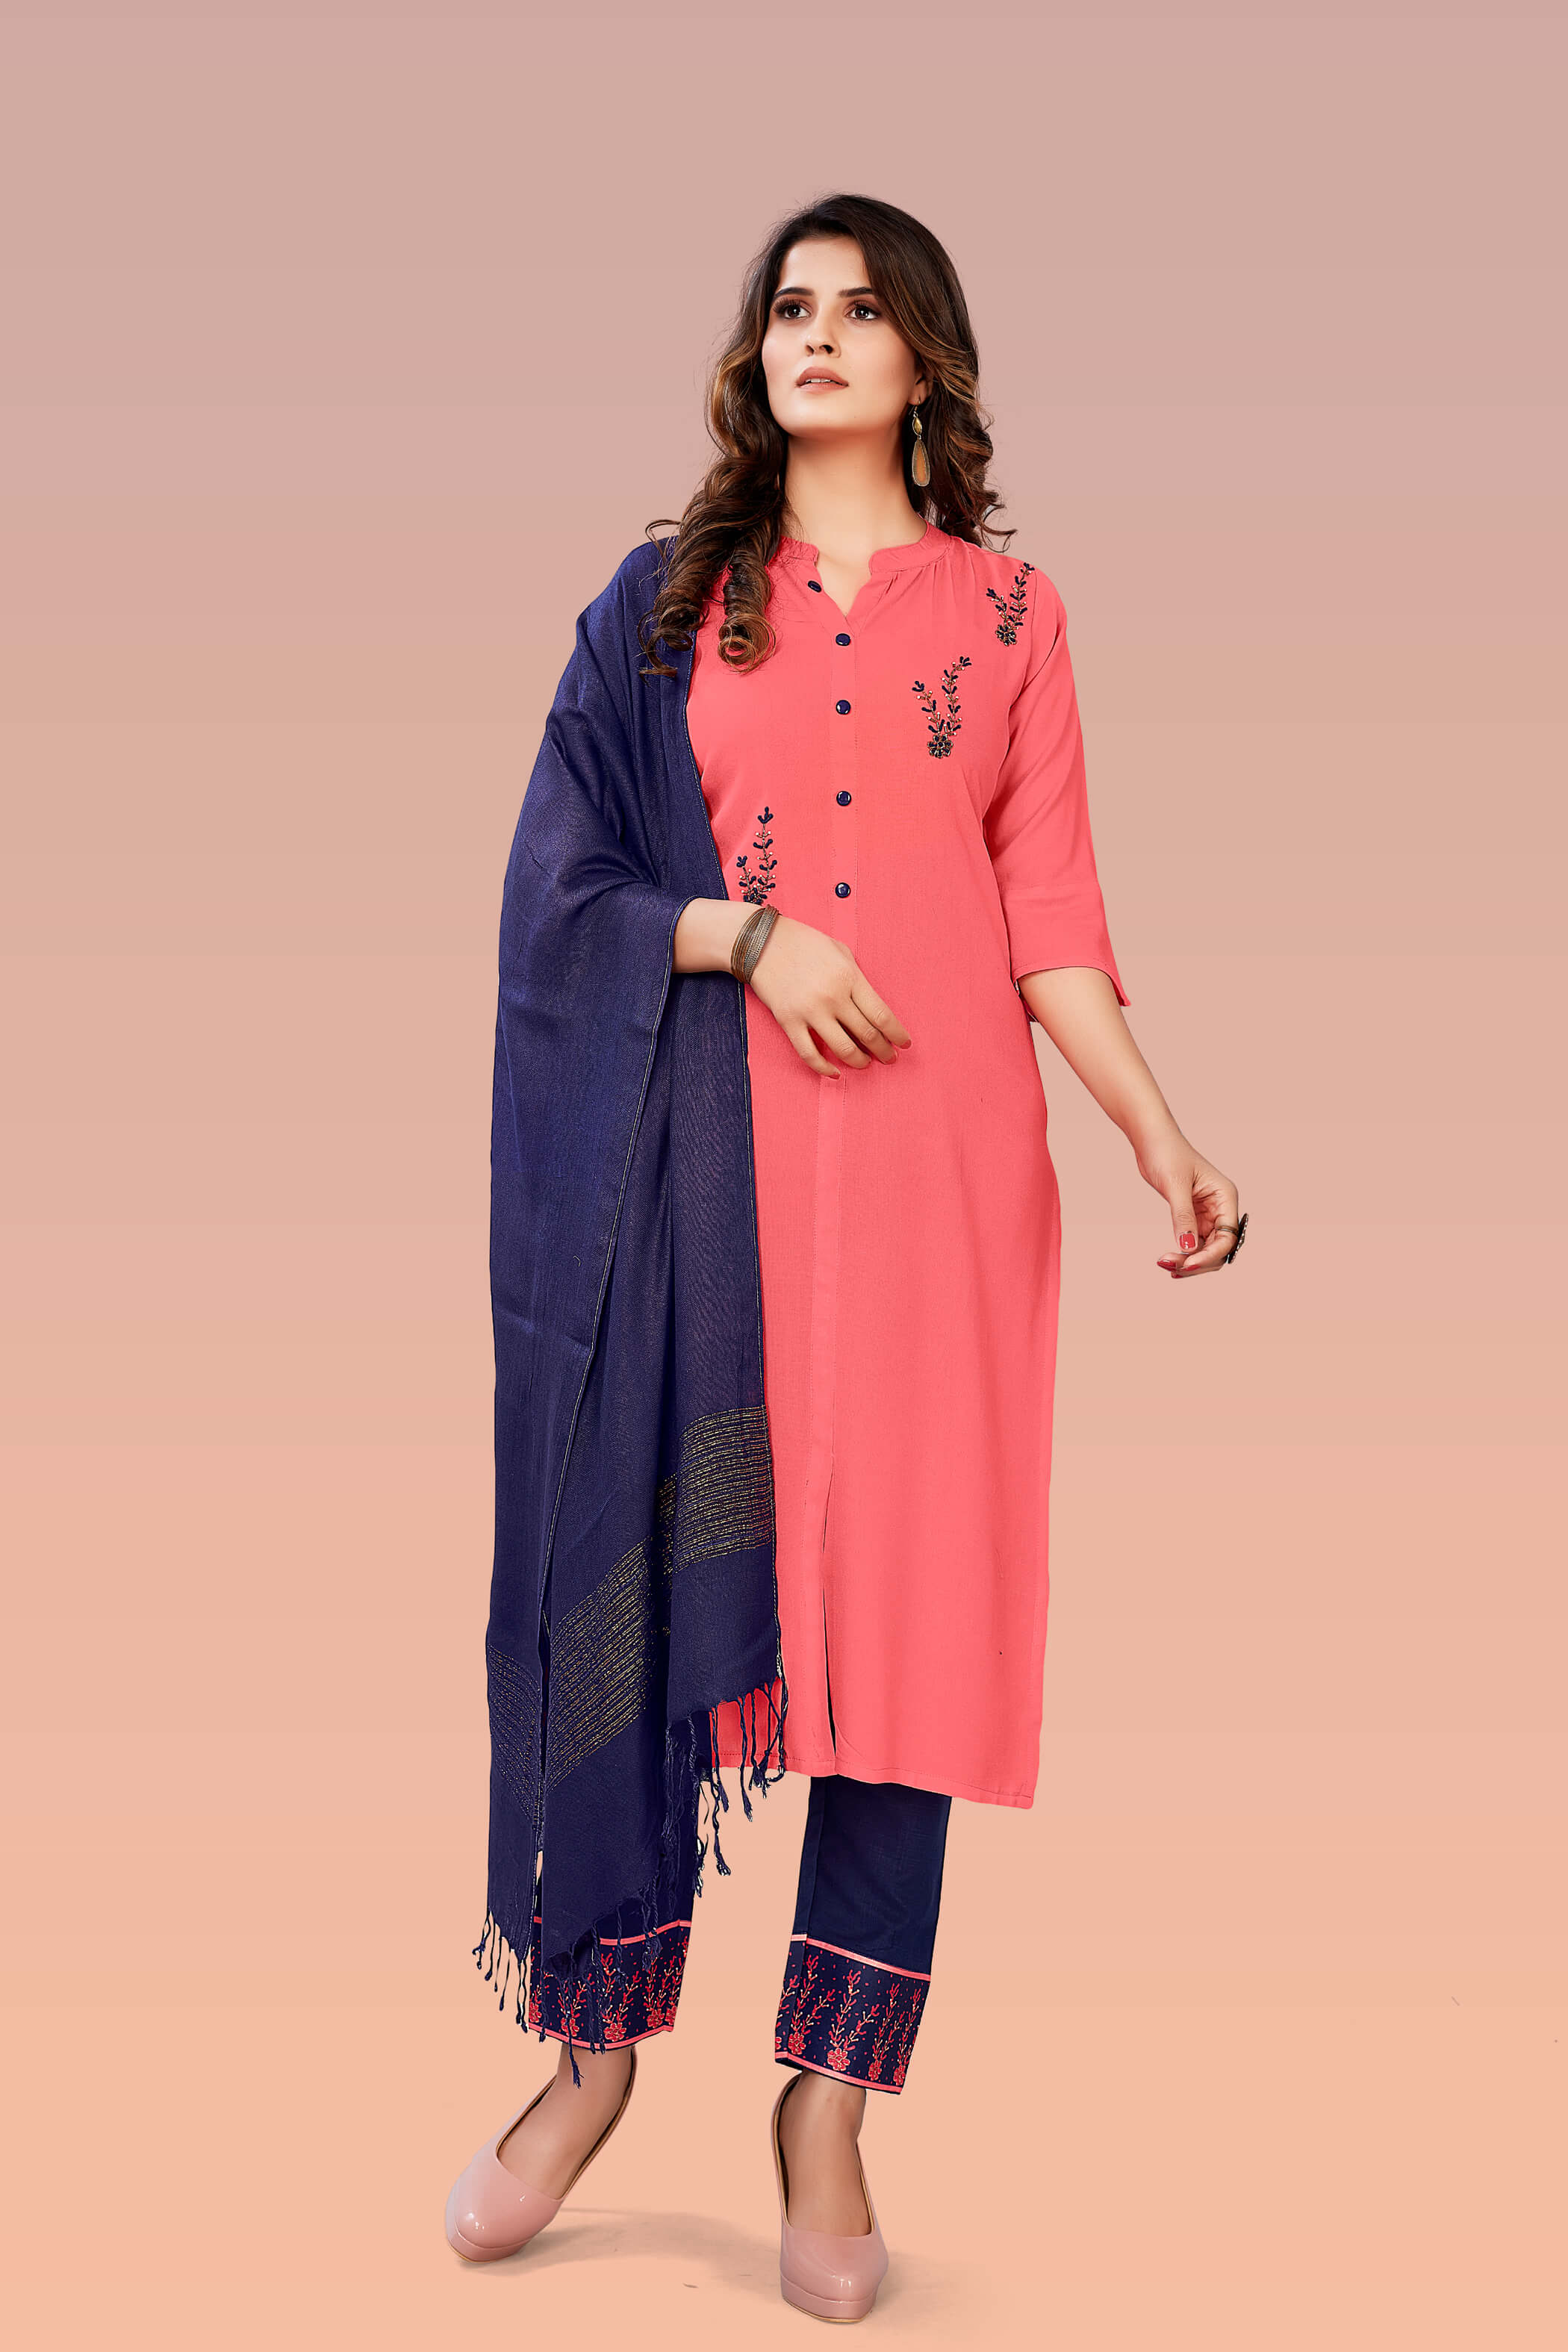 Designer Salwar suit pink kurti